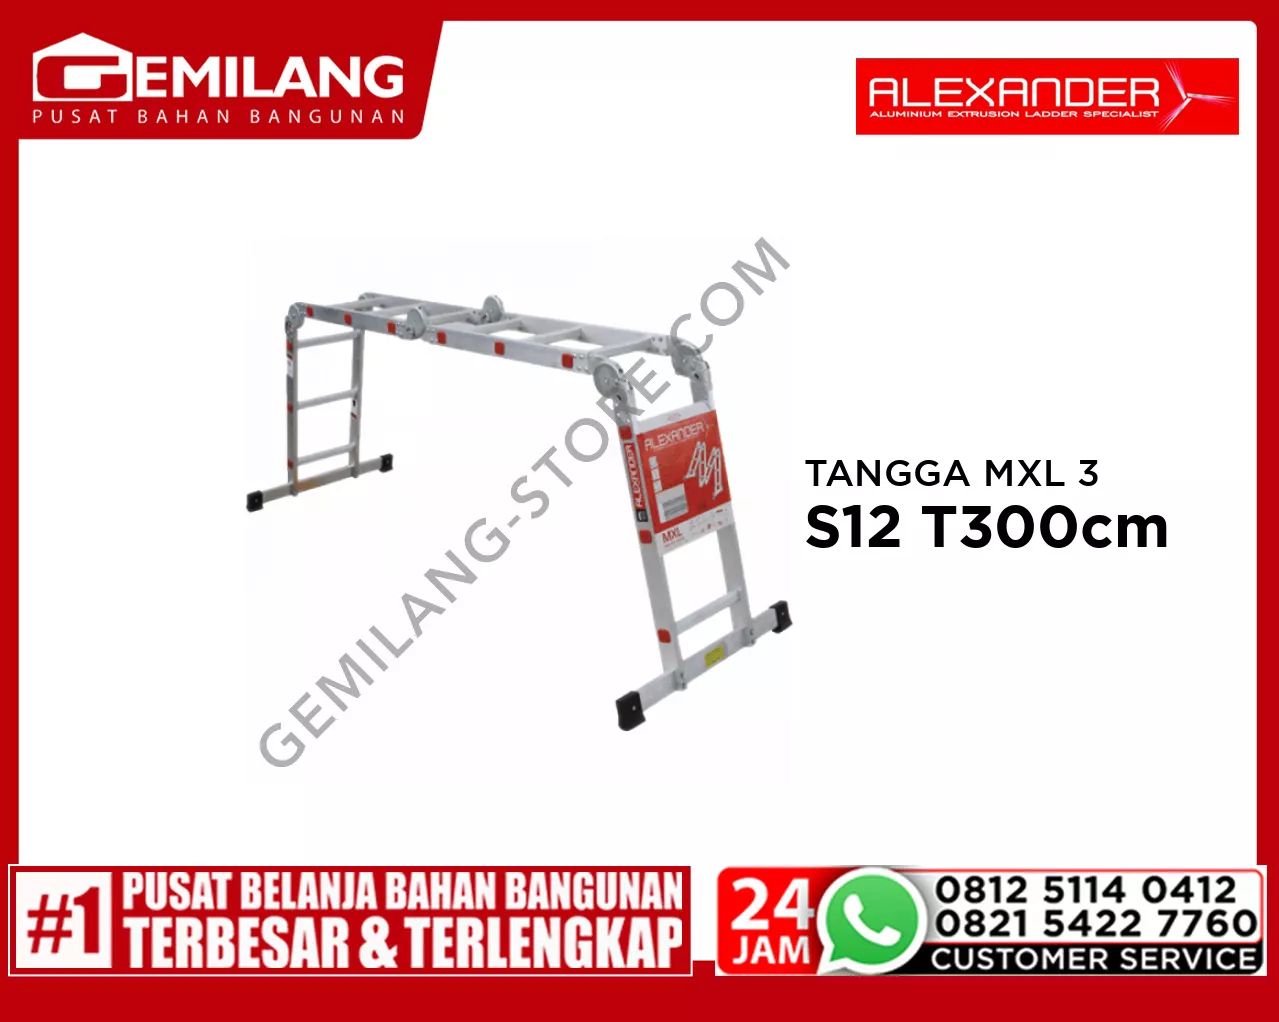 ALEXANDER TANGGA MXL 3 STEPS 12 T300cm